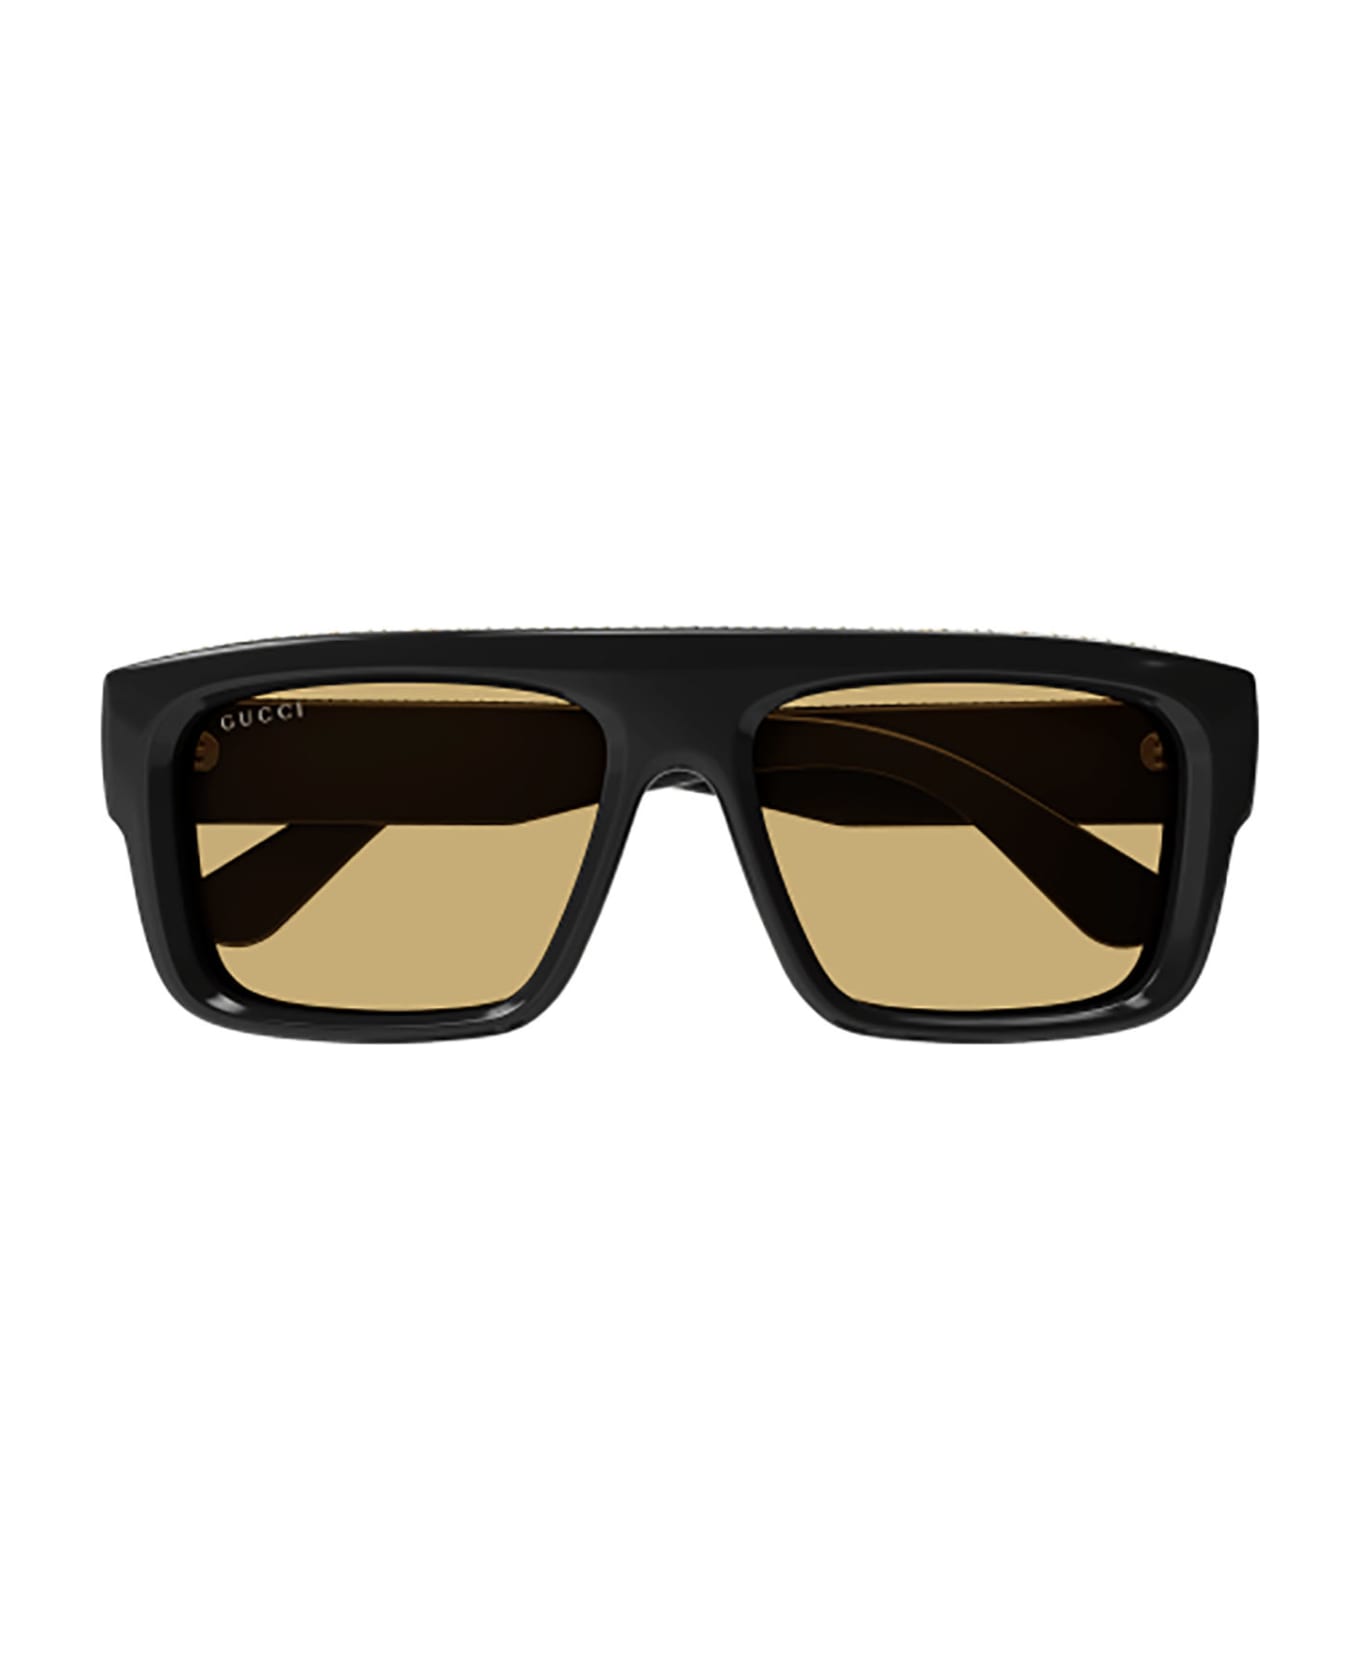 Gucci Eyewear Gg1461s Sunglasses - 004 black black brown サングラス